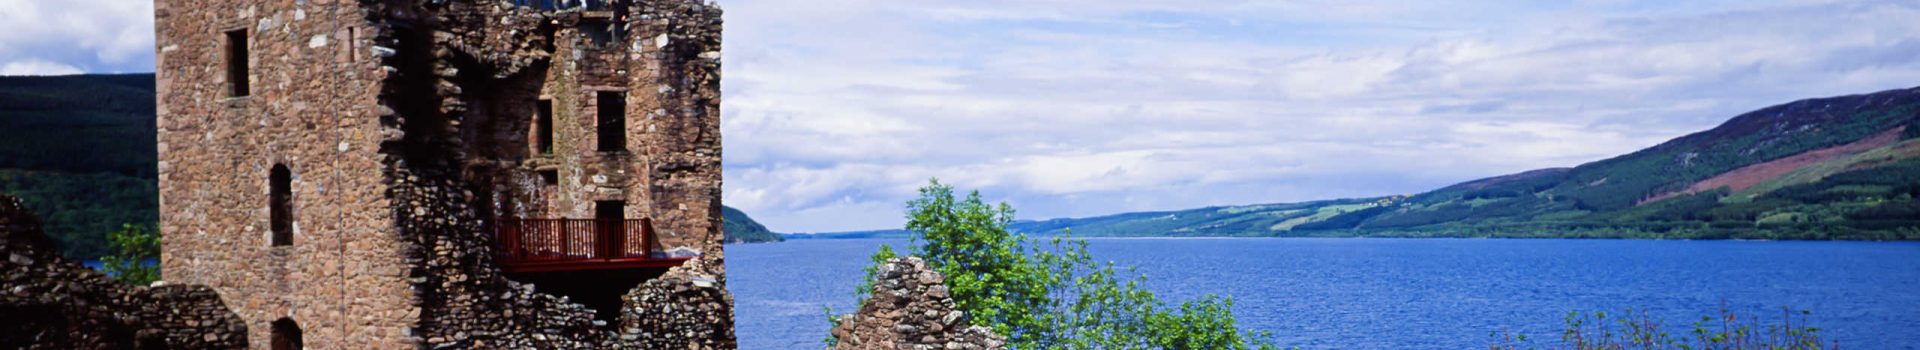 The ruins of Urquhart Castle overlooking Loch Ness